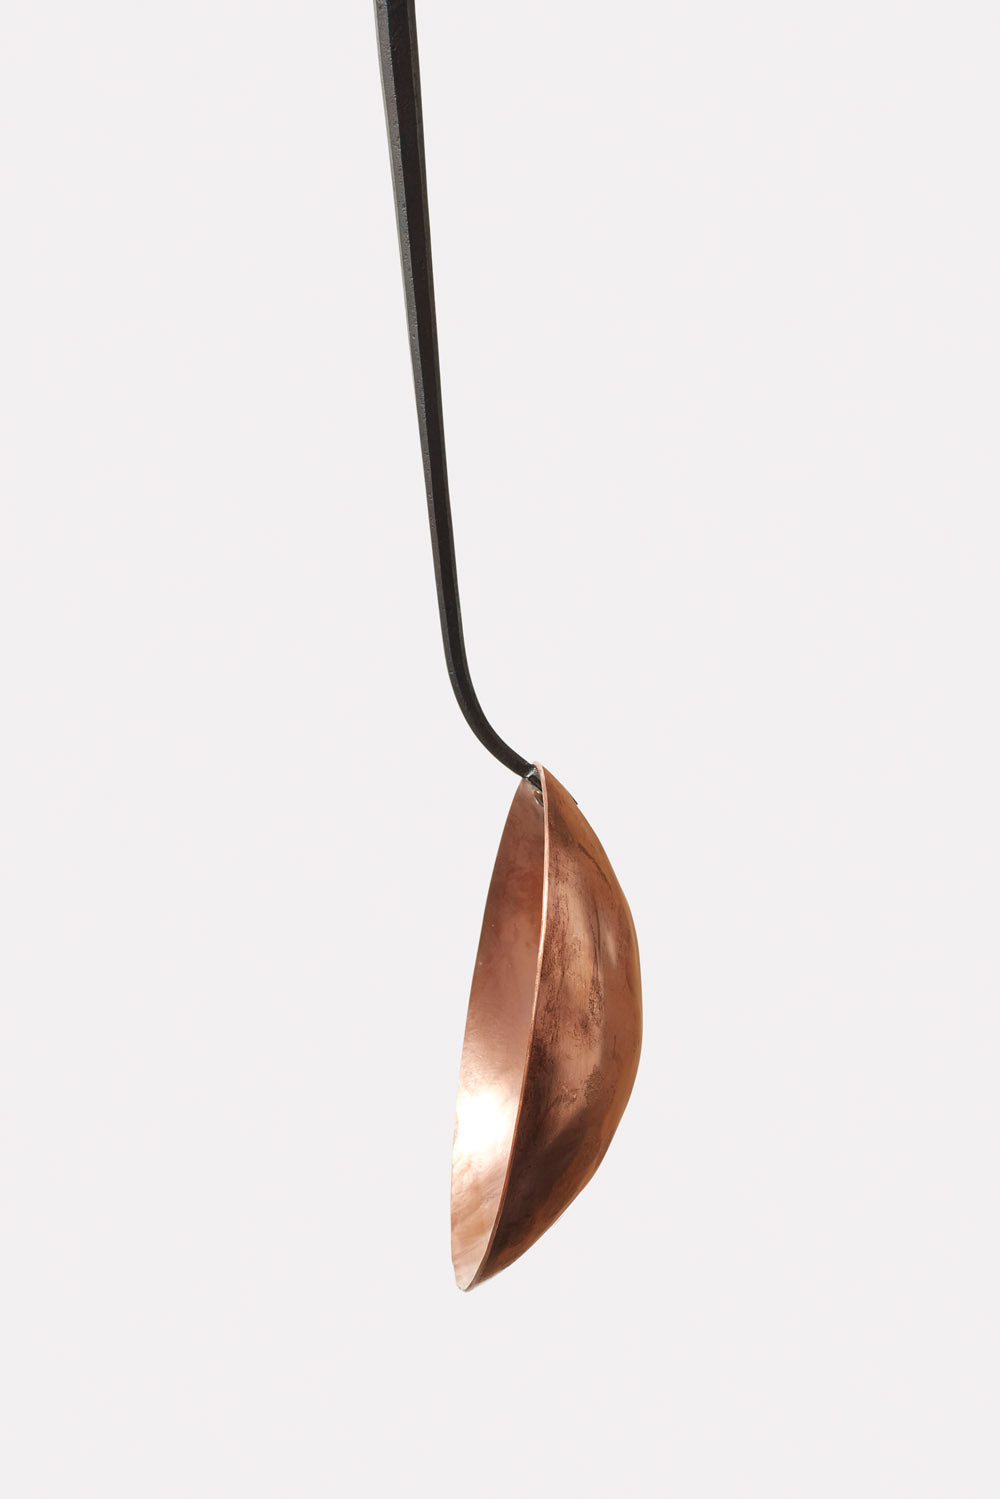 Original Copper Egg Spoon™